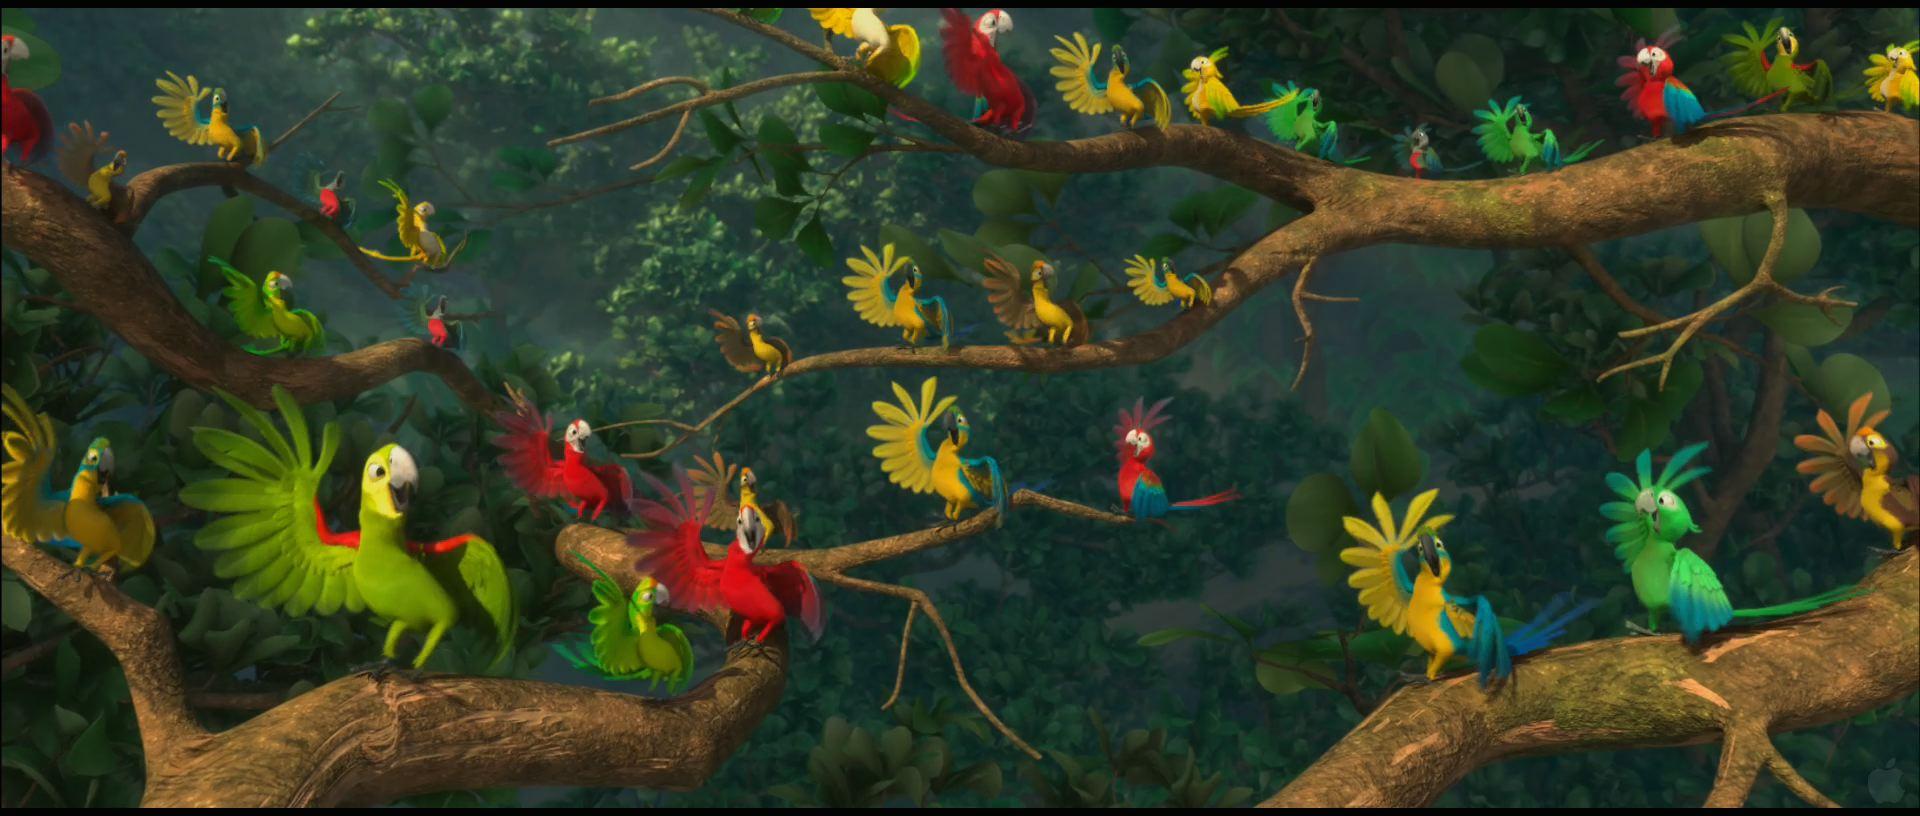 Parrots from Rio Desktop Wallpaper